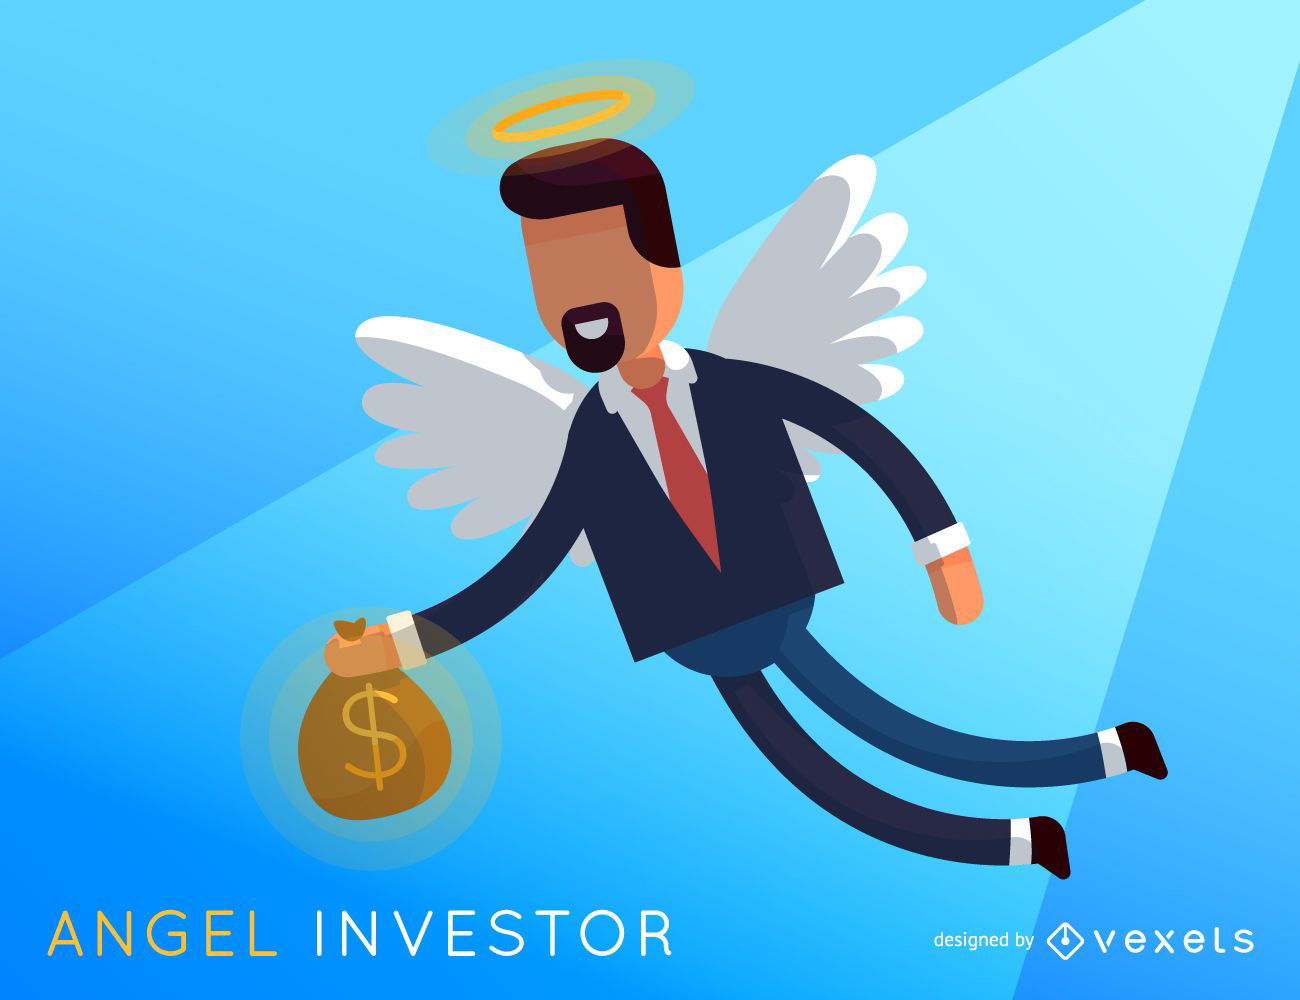 Angel investor illustration